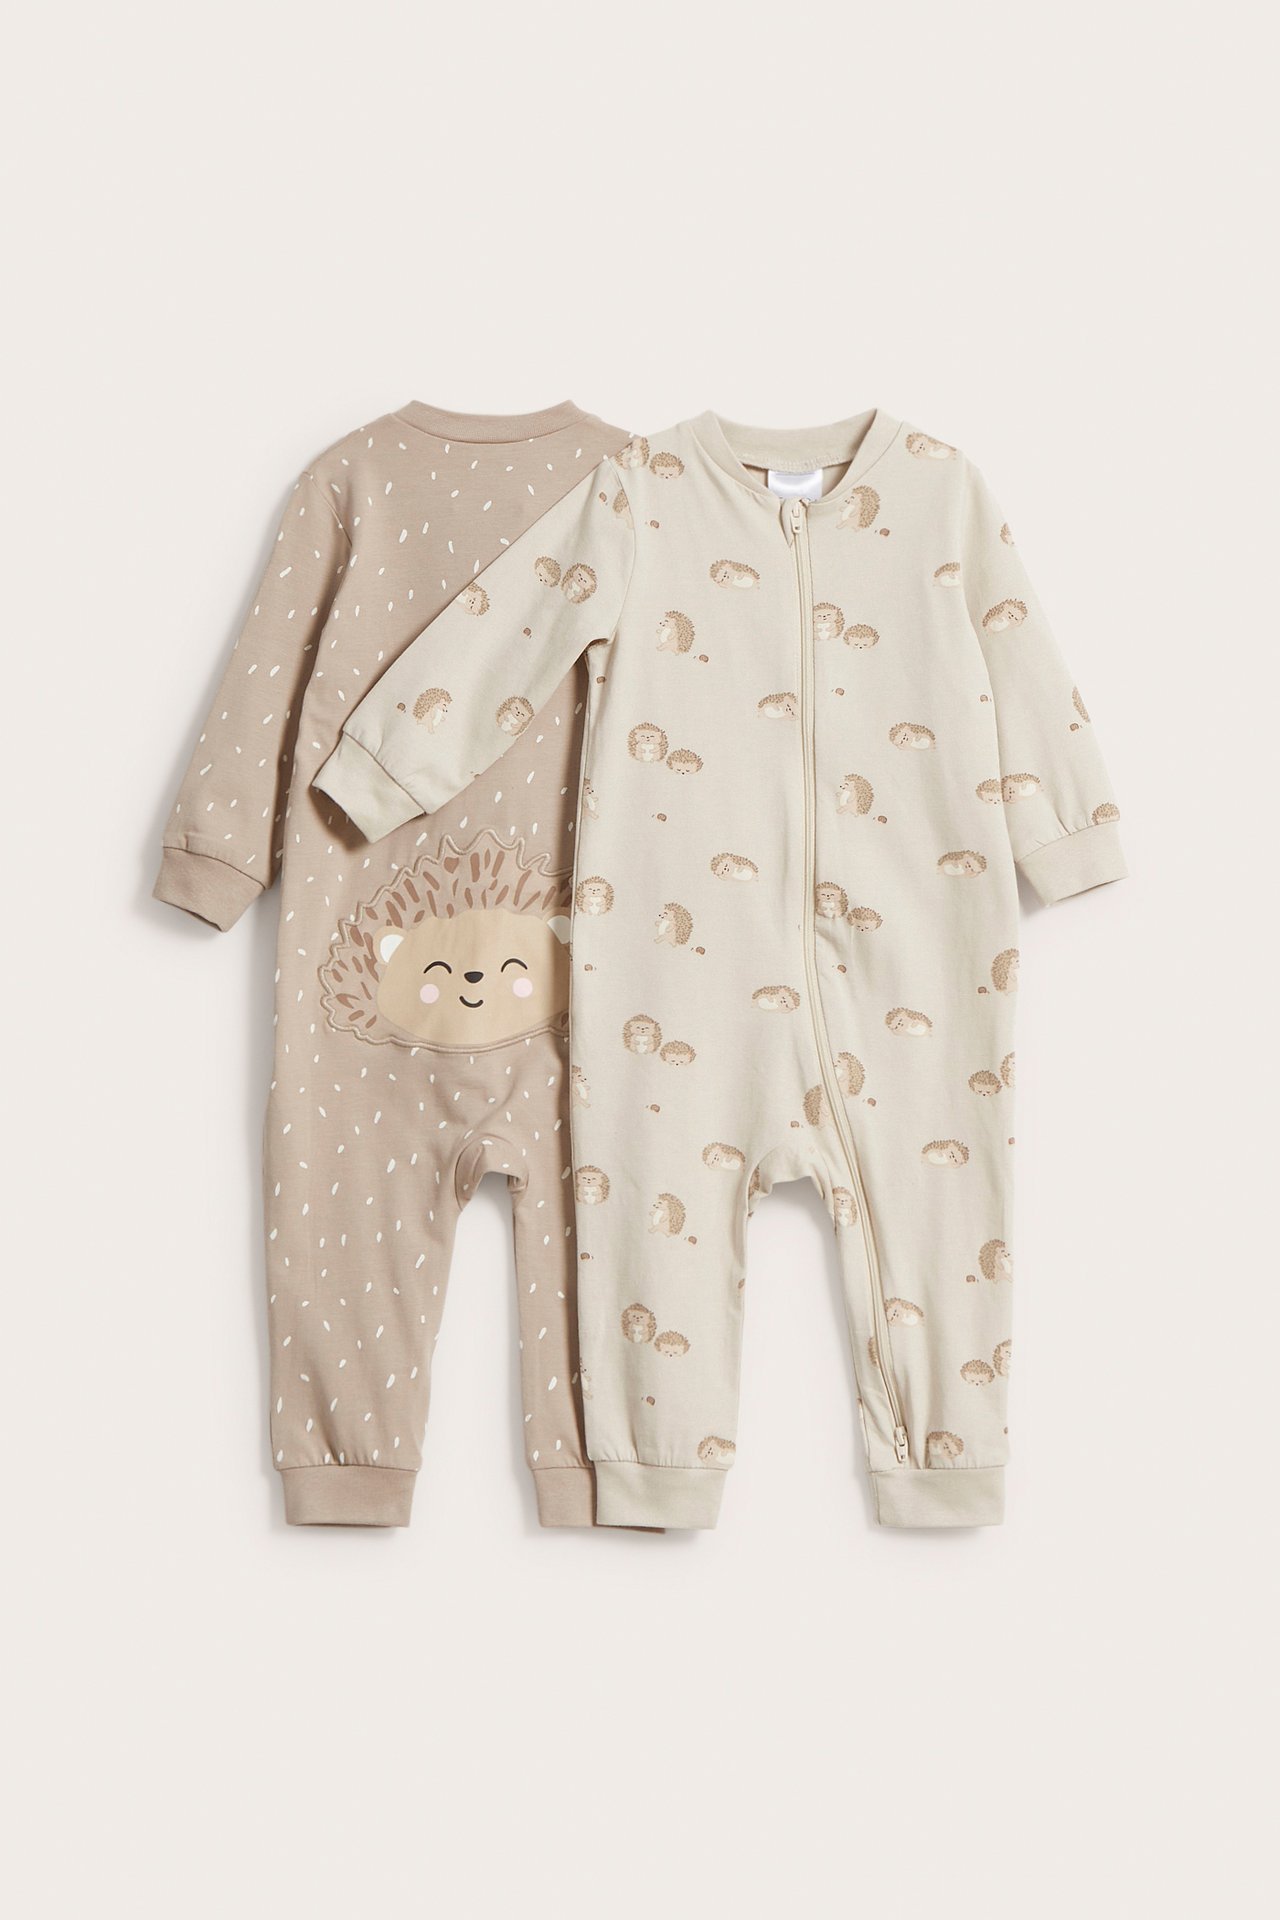 2 kpl:n pakkaus kuviollisia vauvojen pyjamia